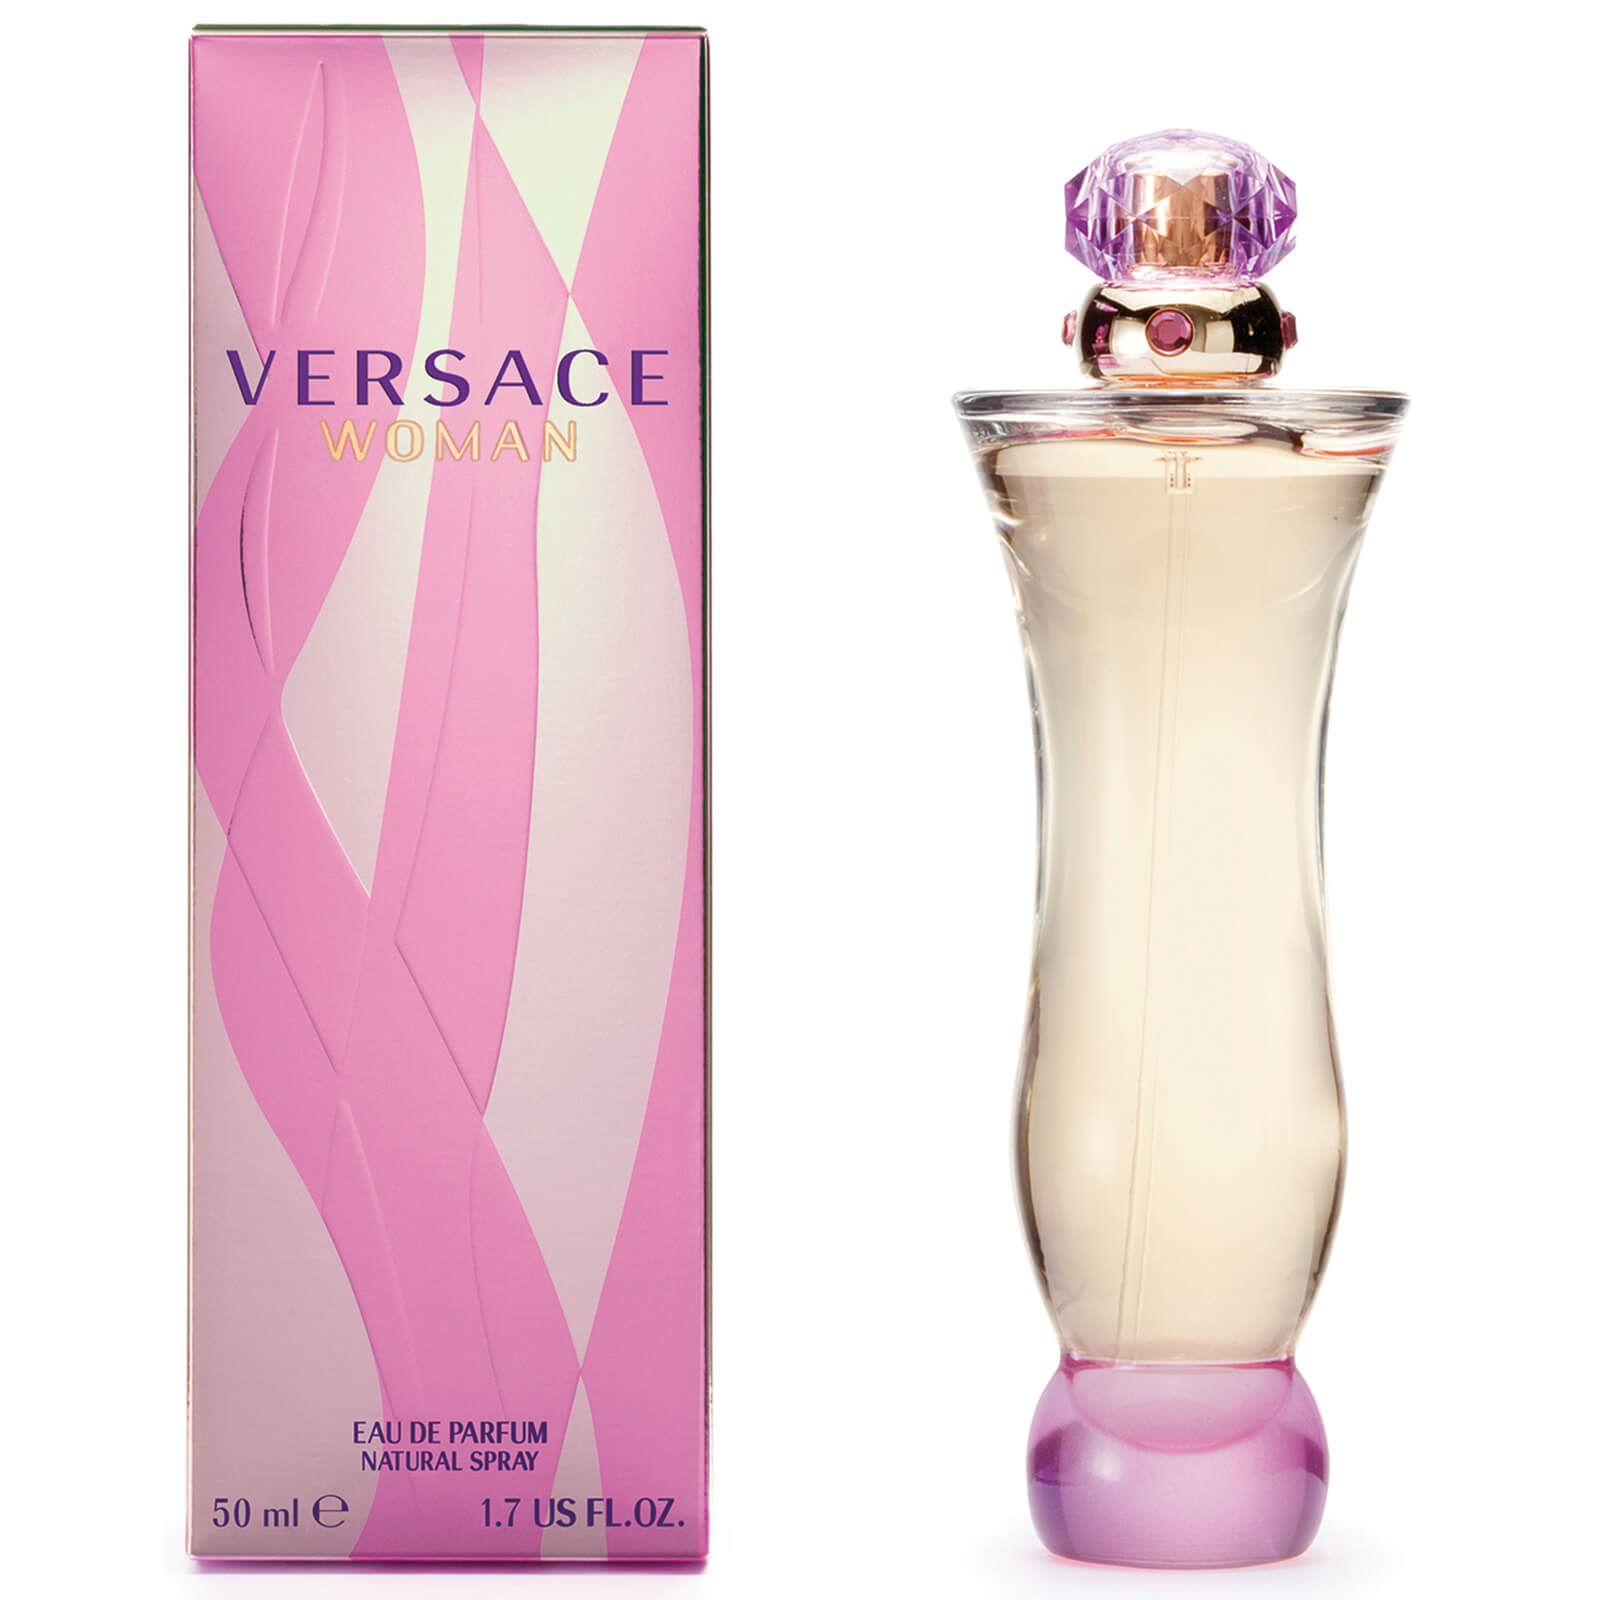 Versace Woman Eau de Parfum 50ml | HQ Hair